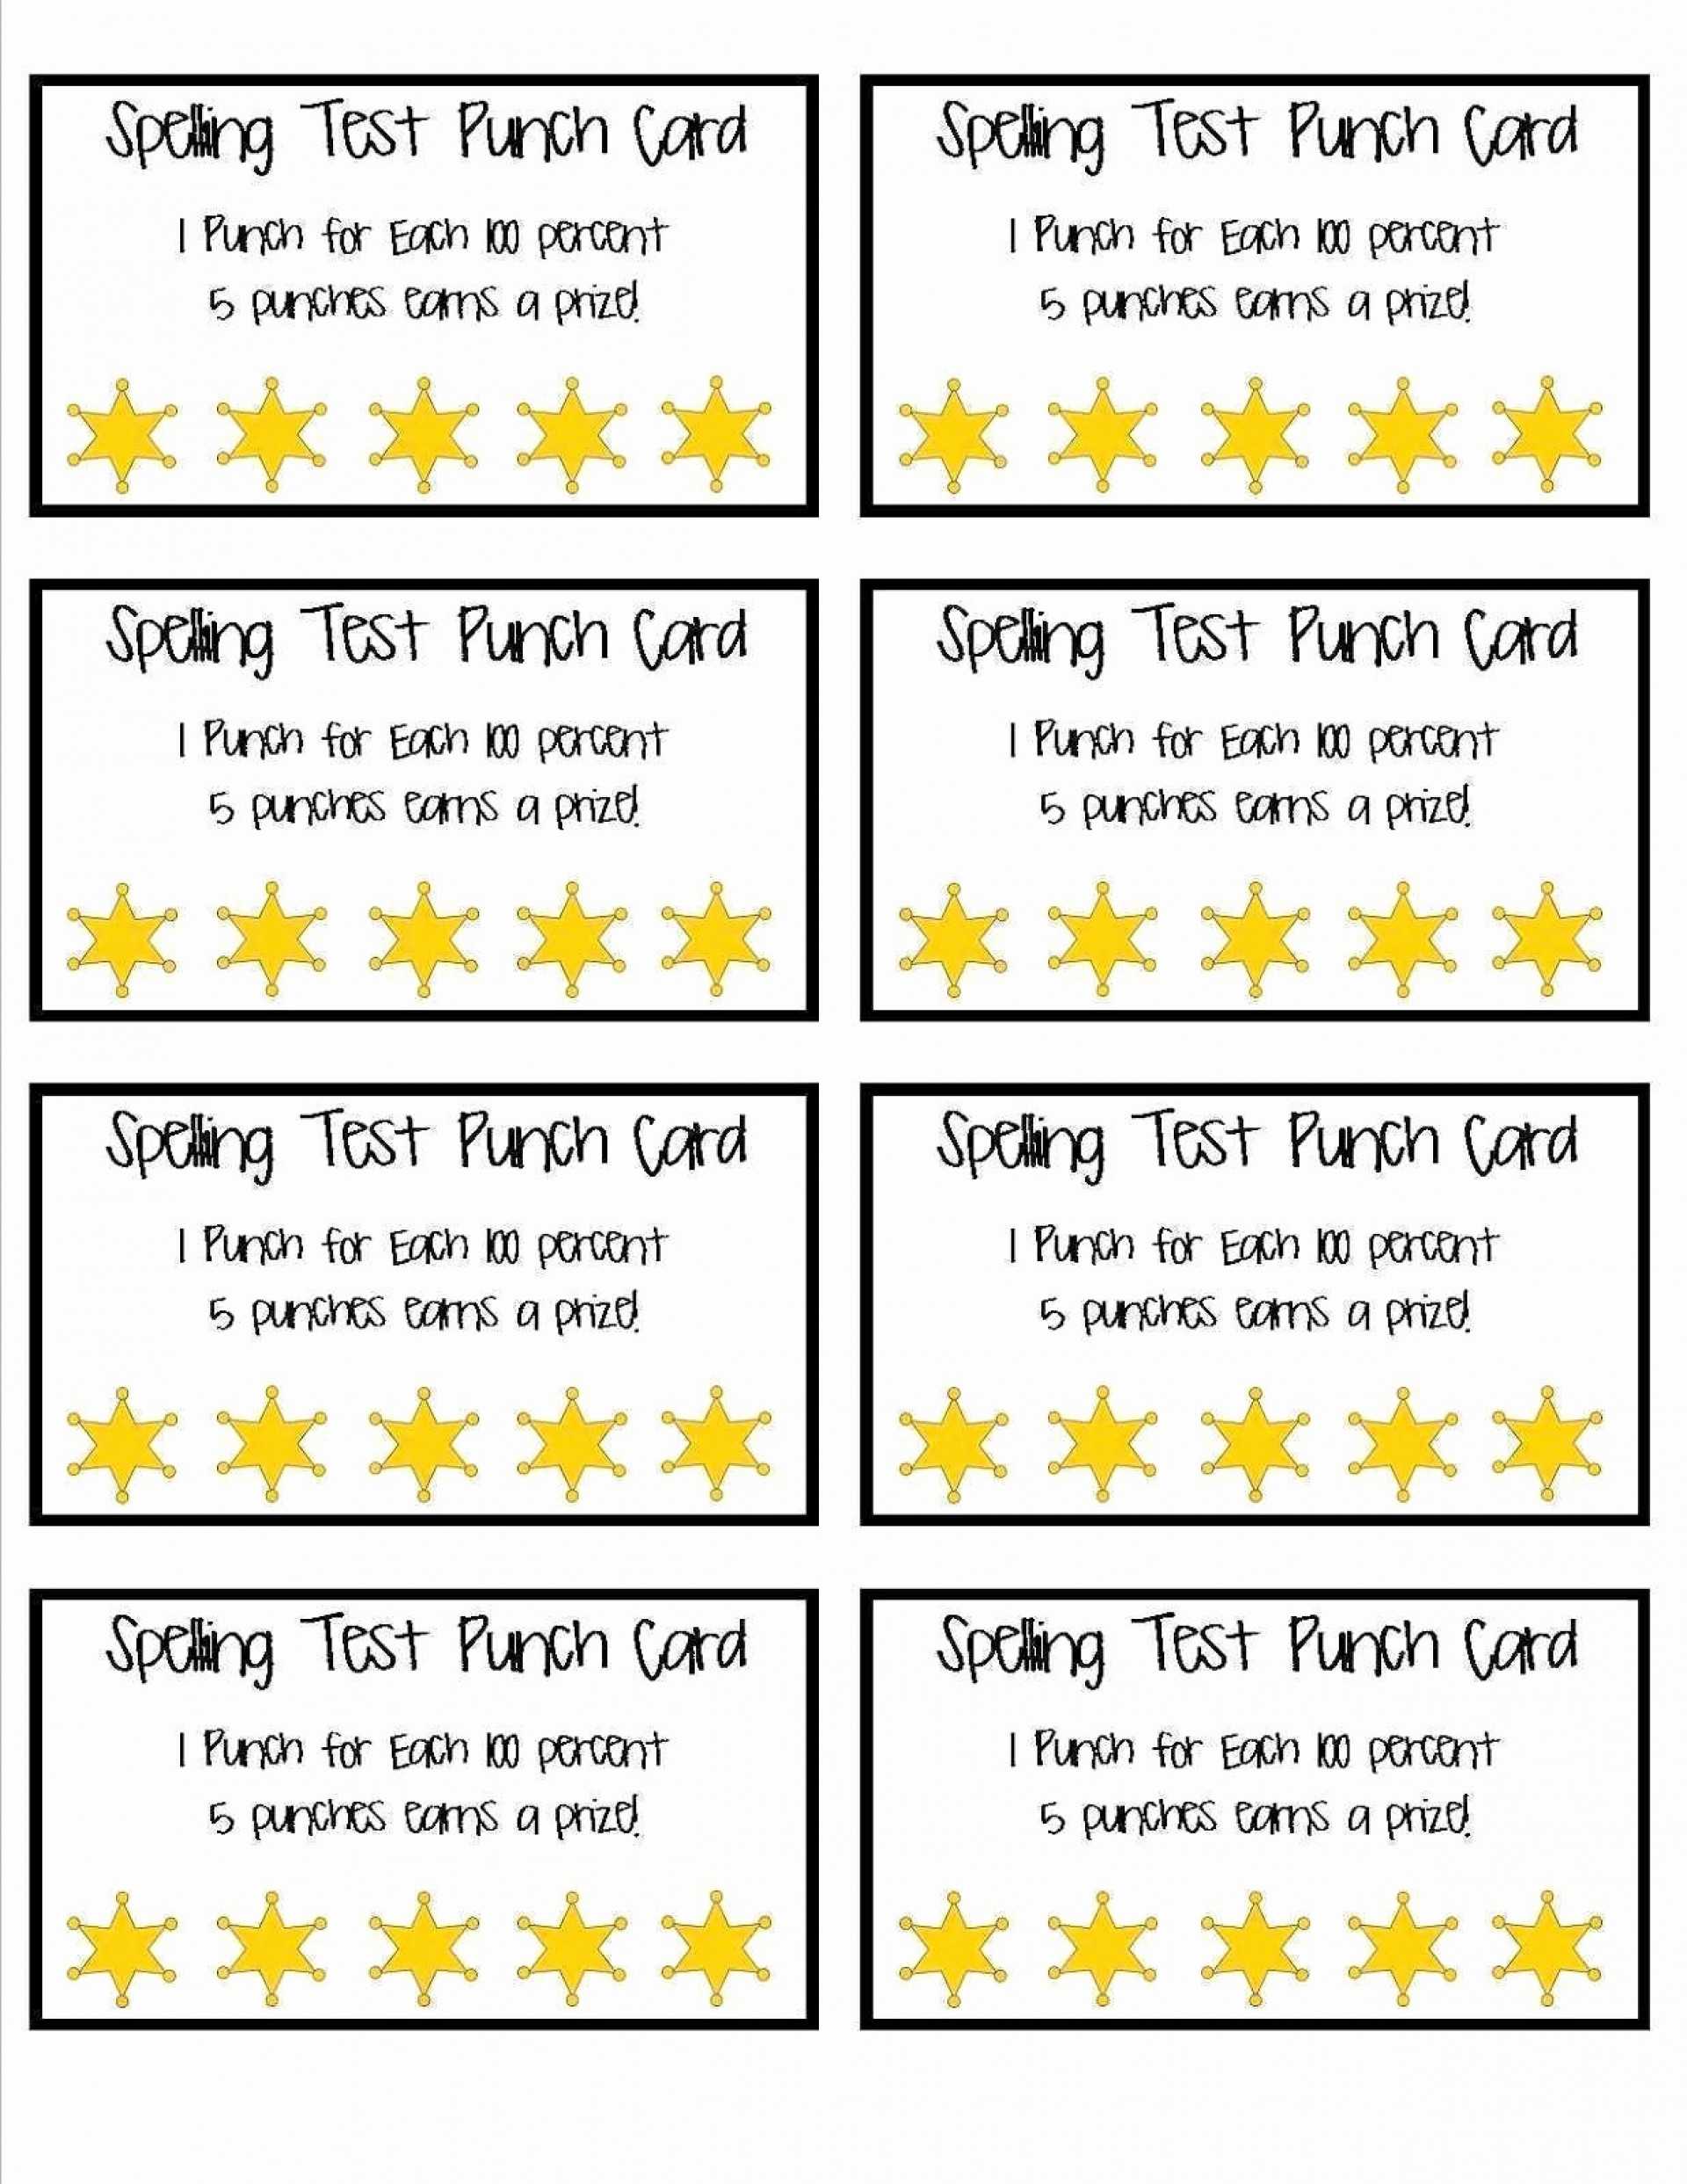 023 Template Ideas Behavior Punch Cards Pinterest Card With Regard To Business Punch Card Template Free